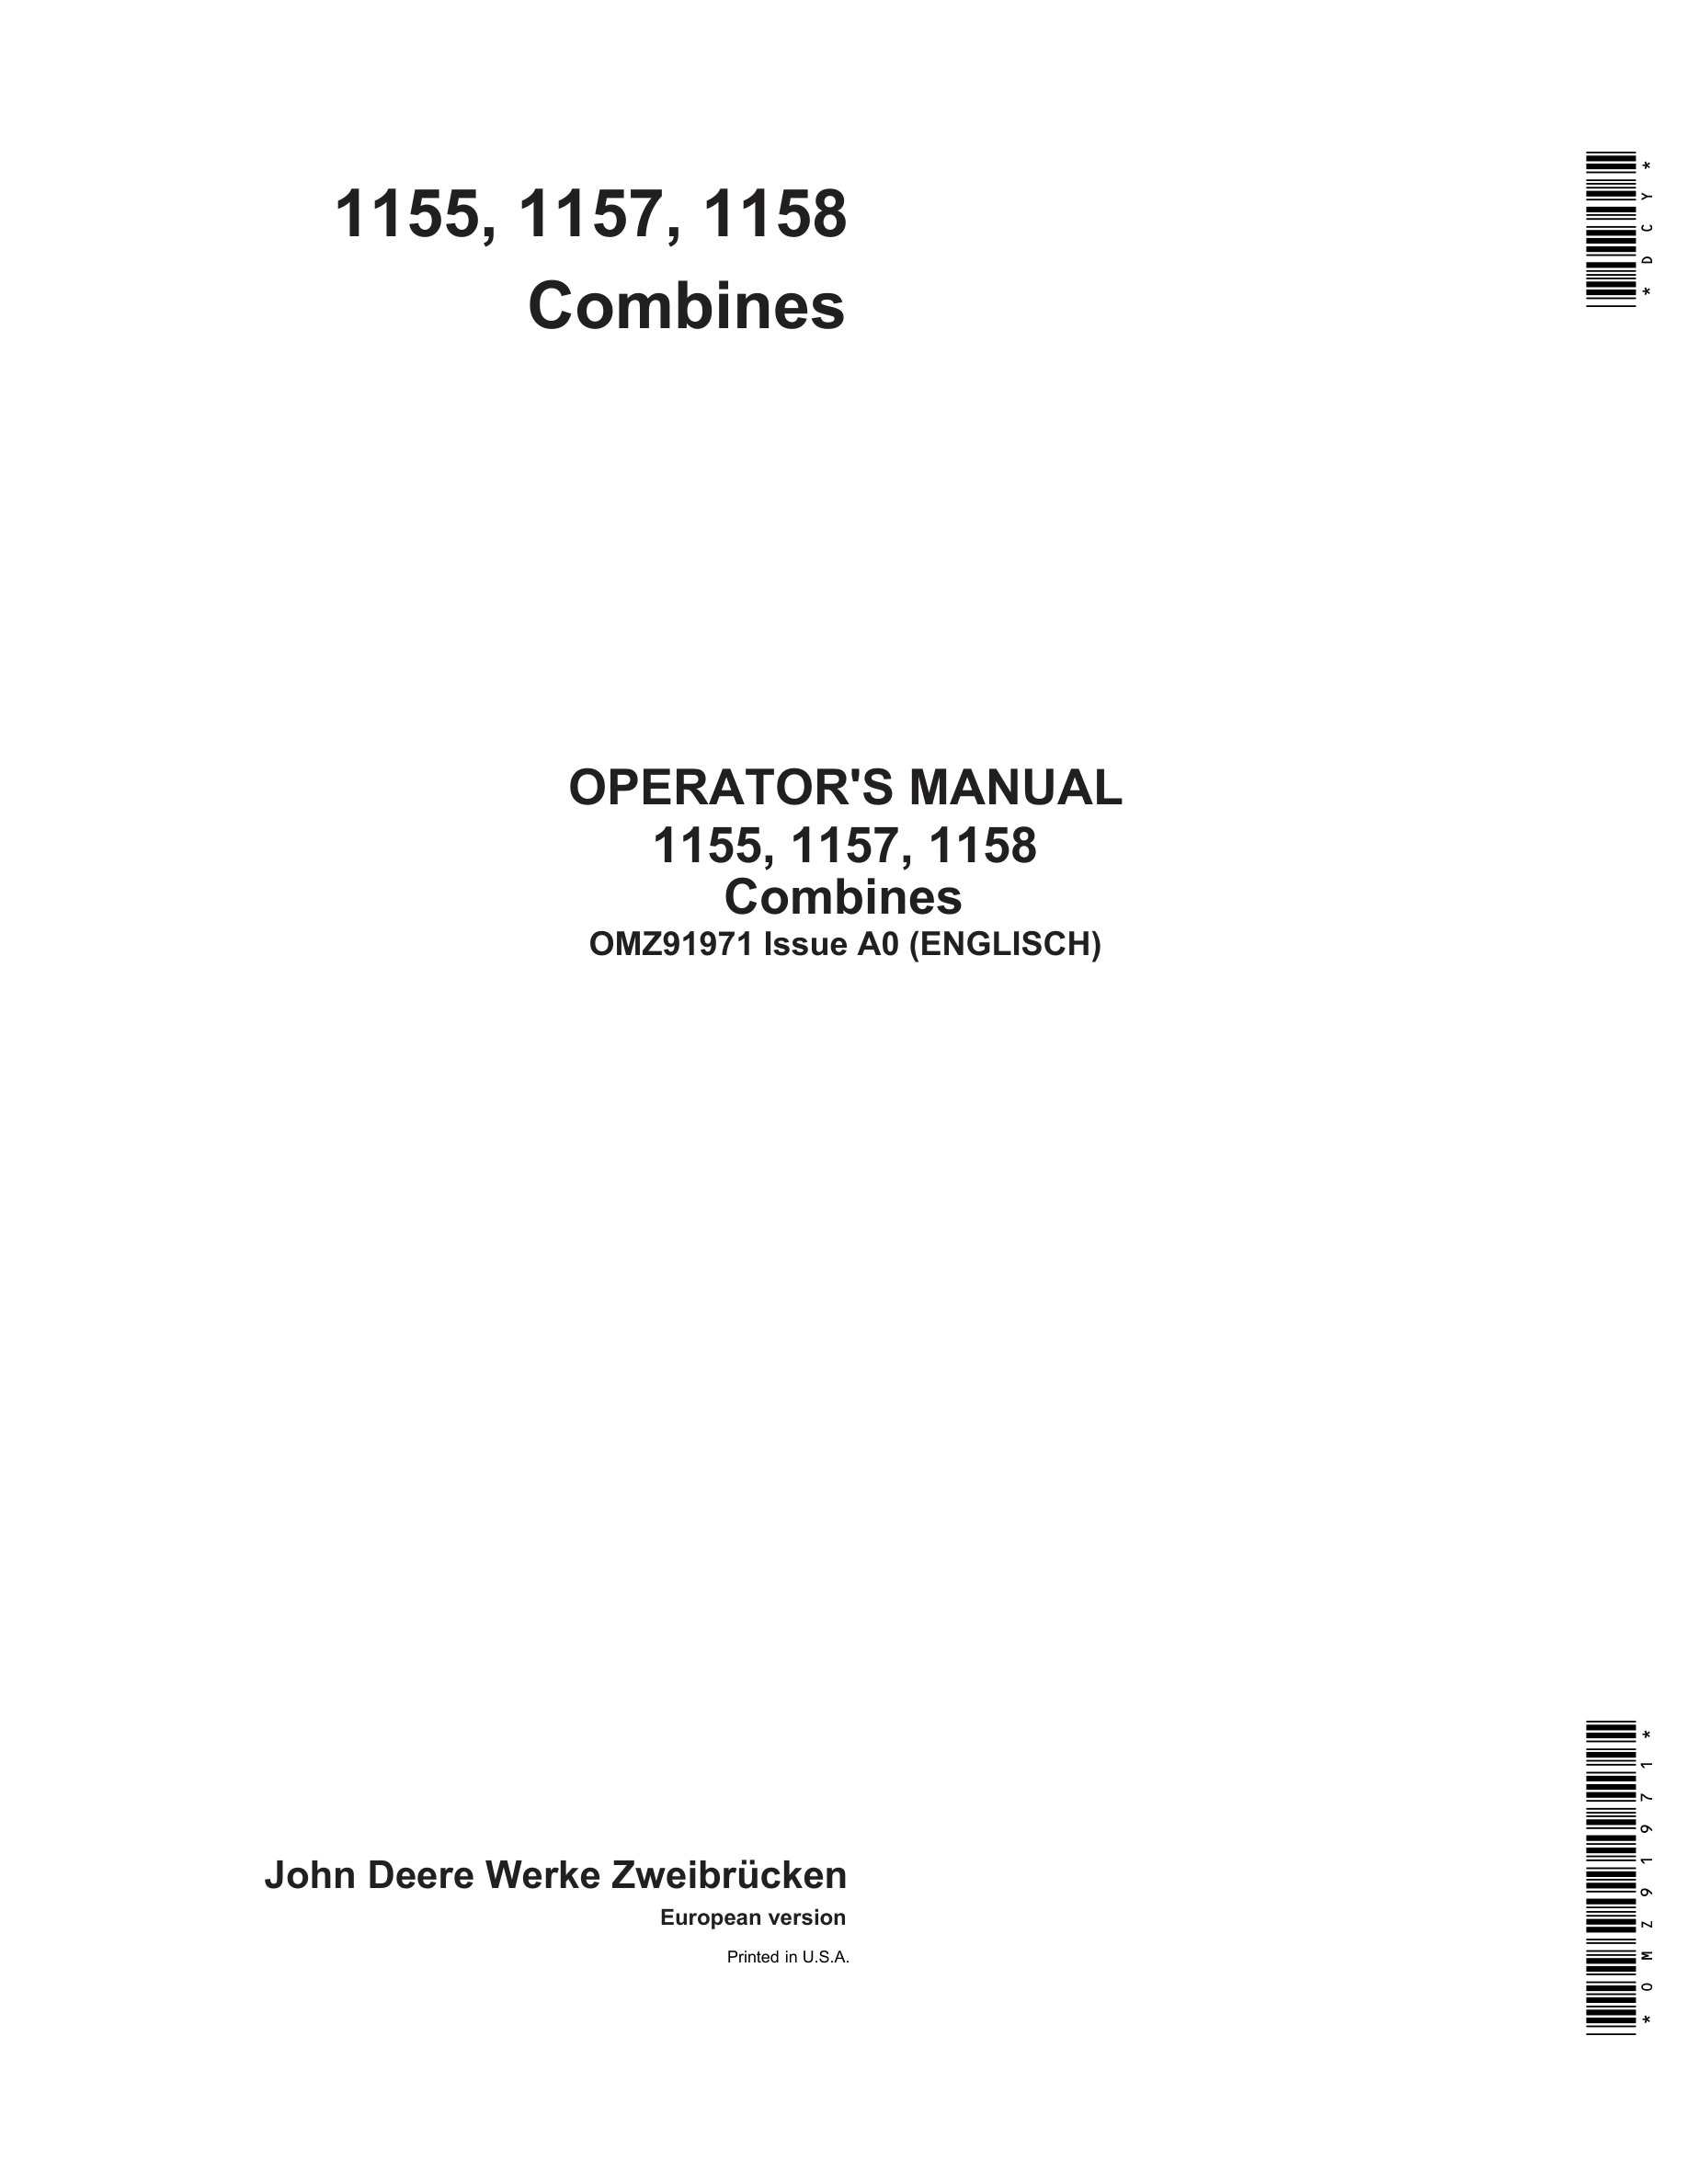 John Deere 1155, 1157, 1158 Combine Operator Manual OMZ91971-1